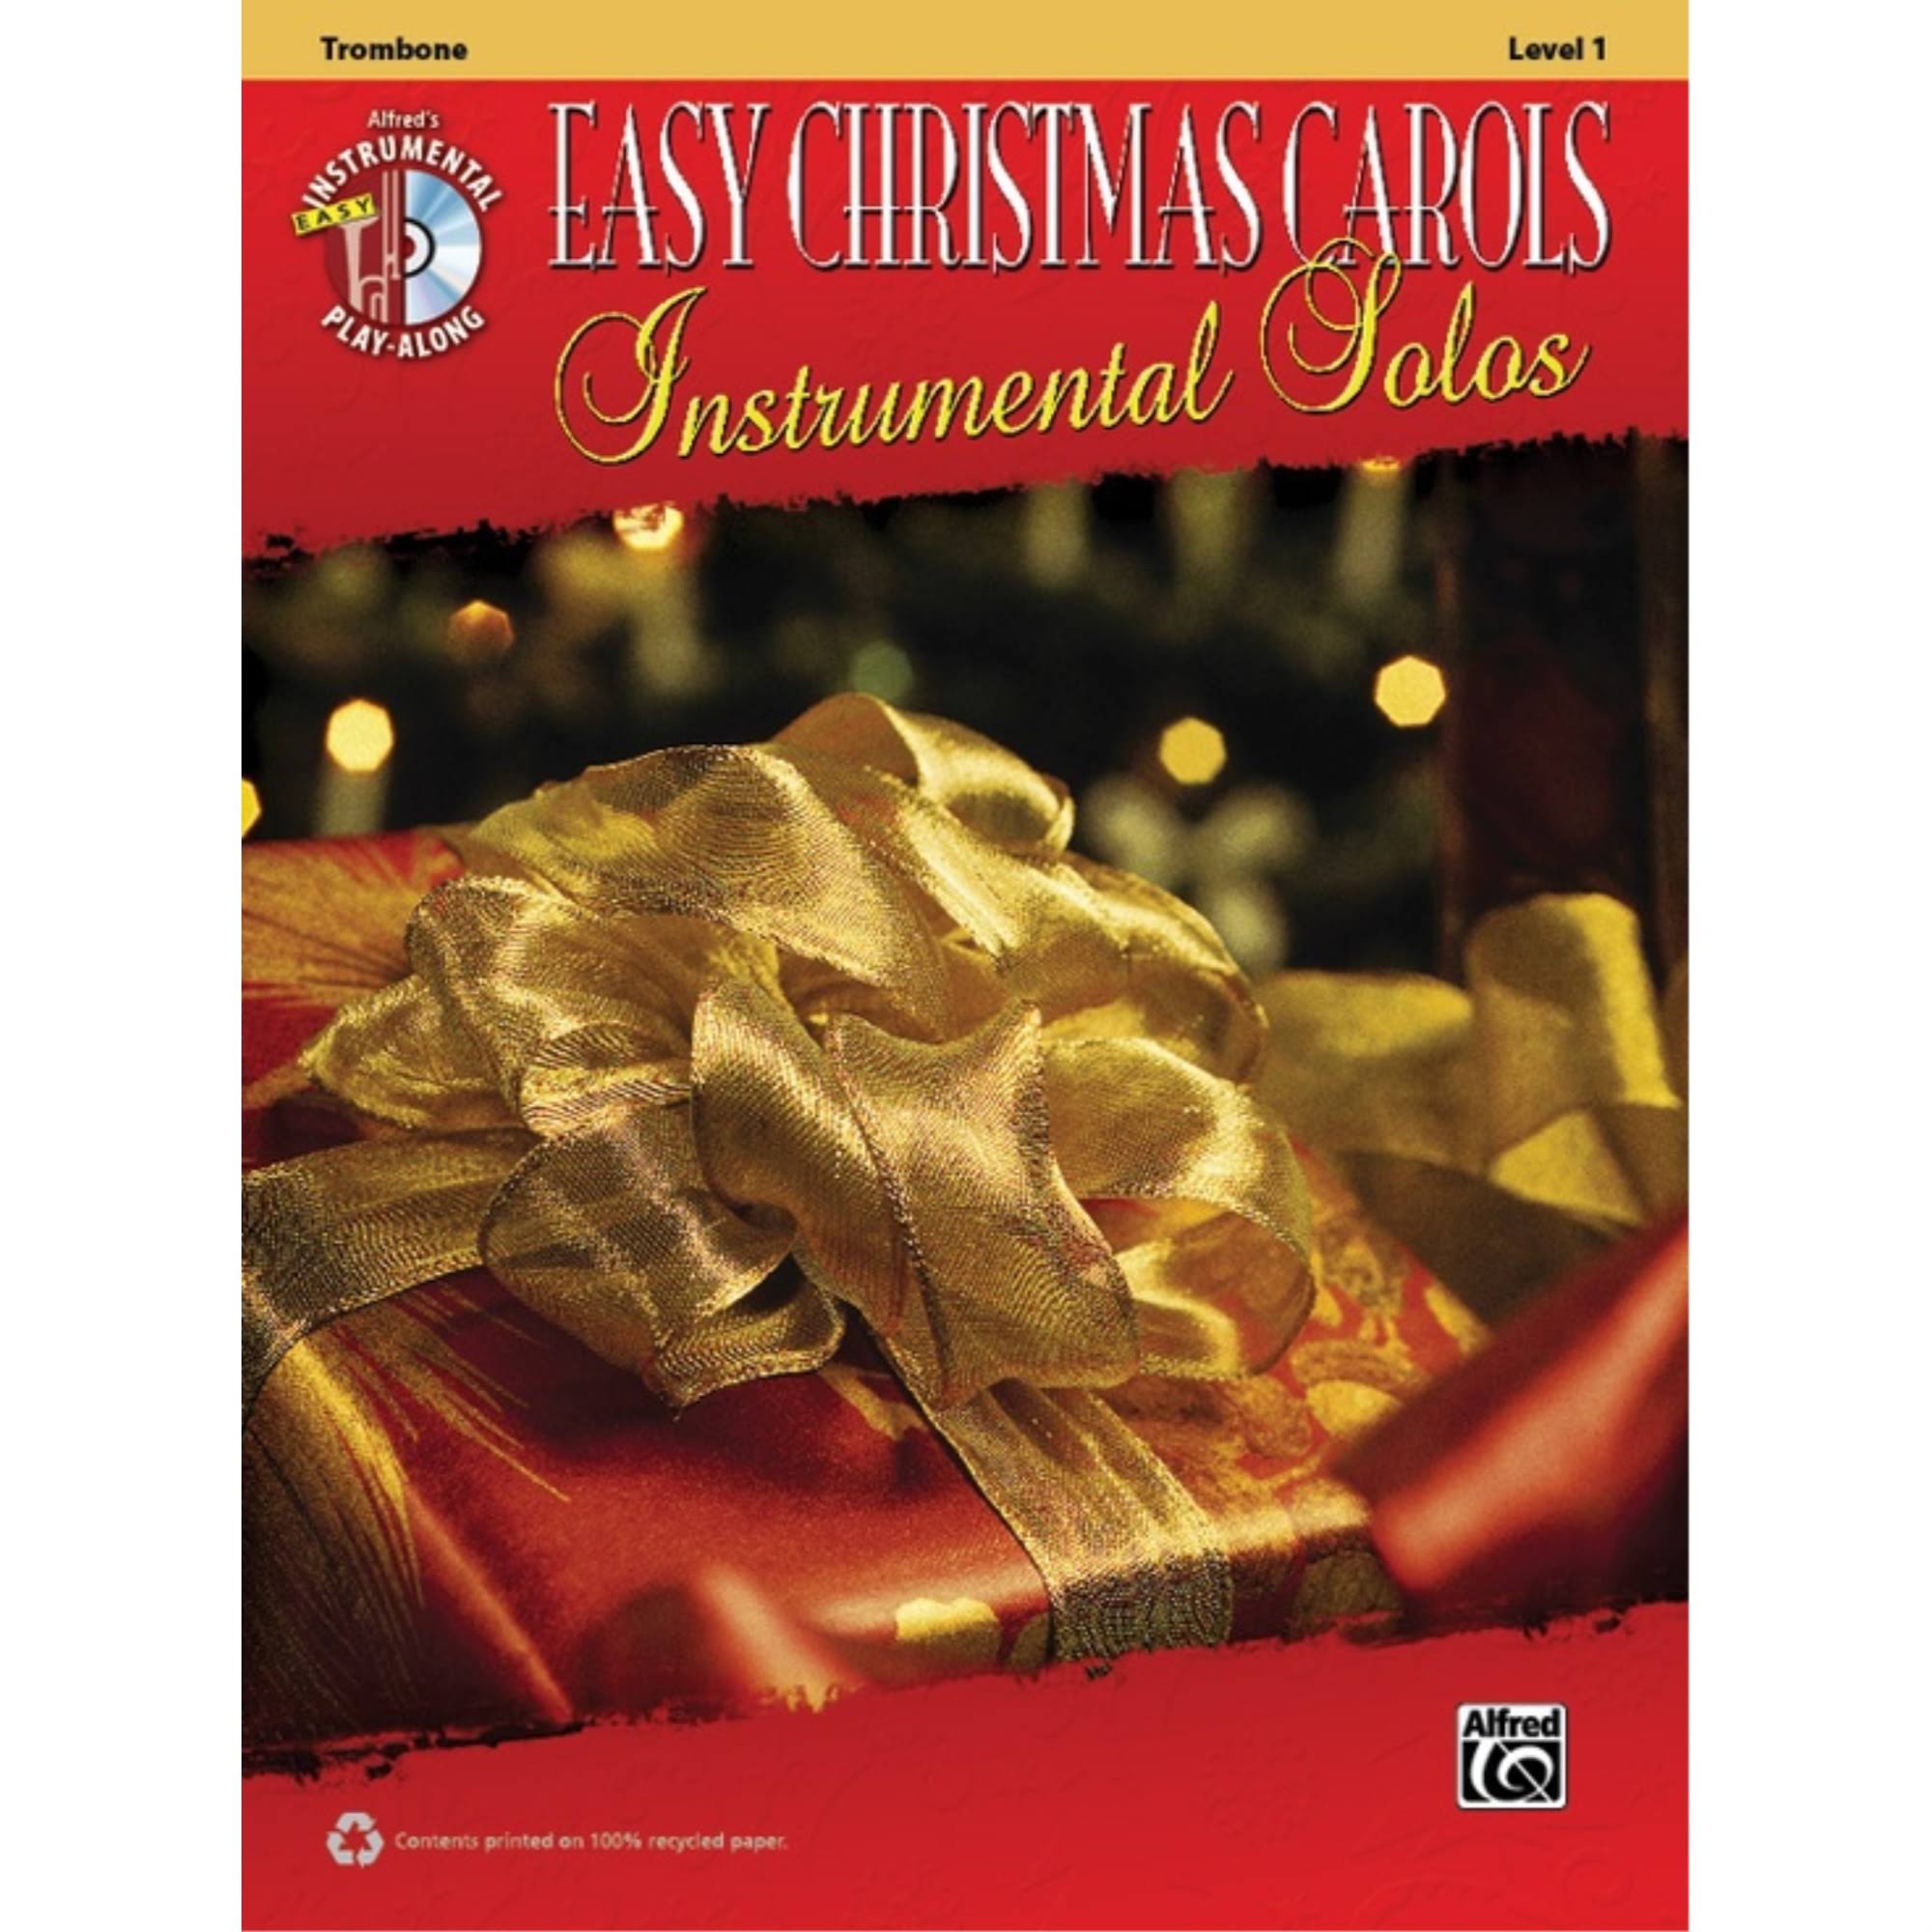 Alfred Music Easy Christmas Carols Inst Solos Trombone Book/CD